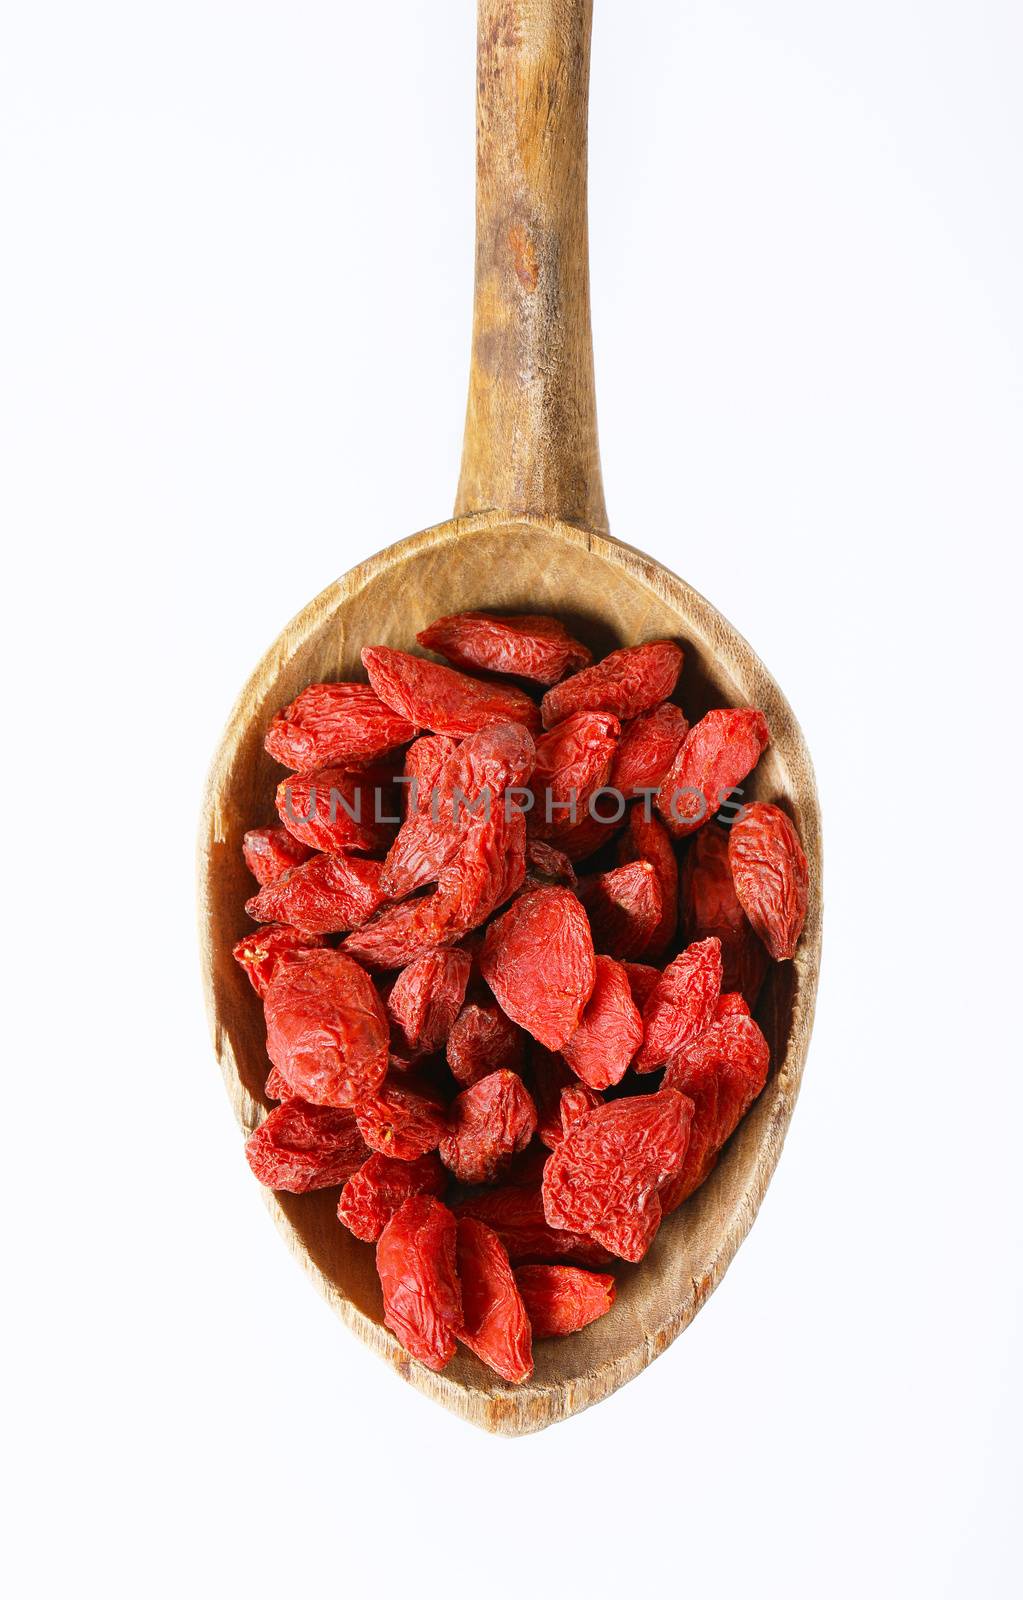 dried goji berries by Digifoodstock